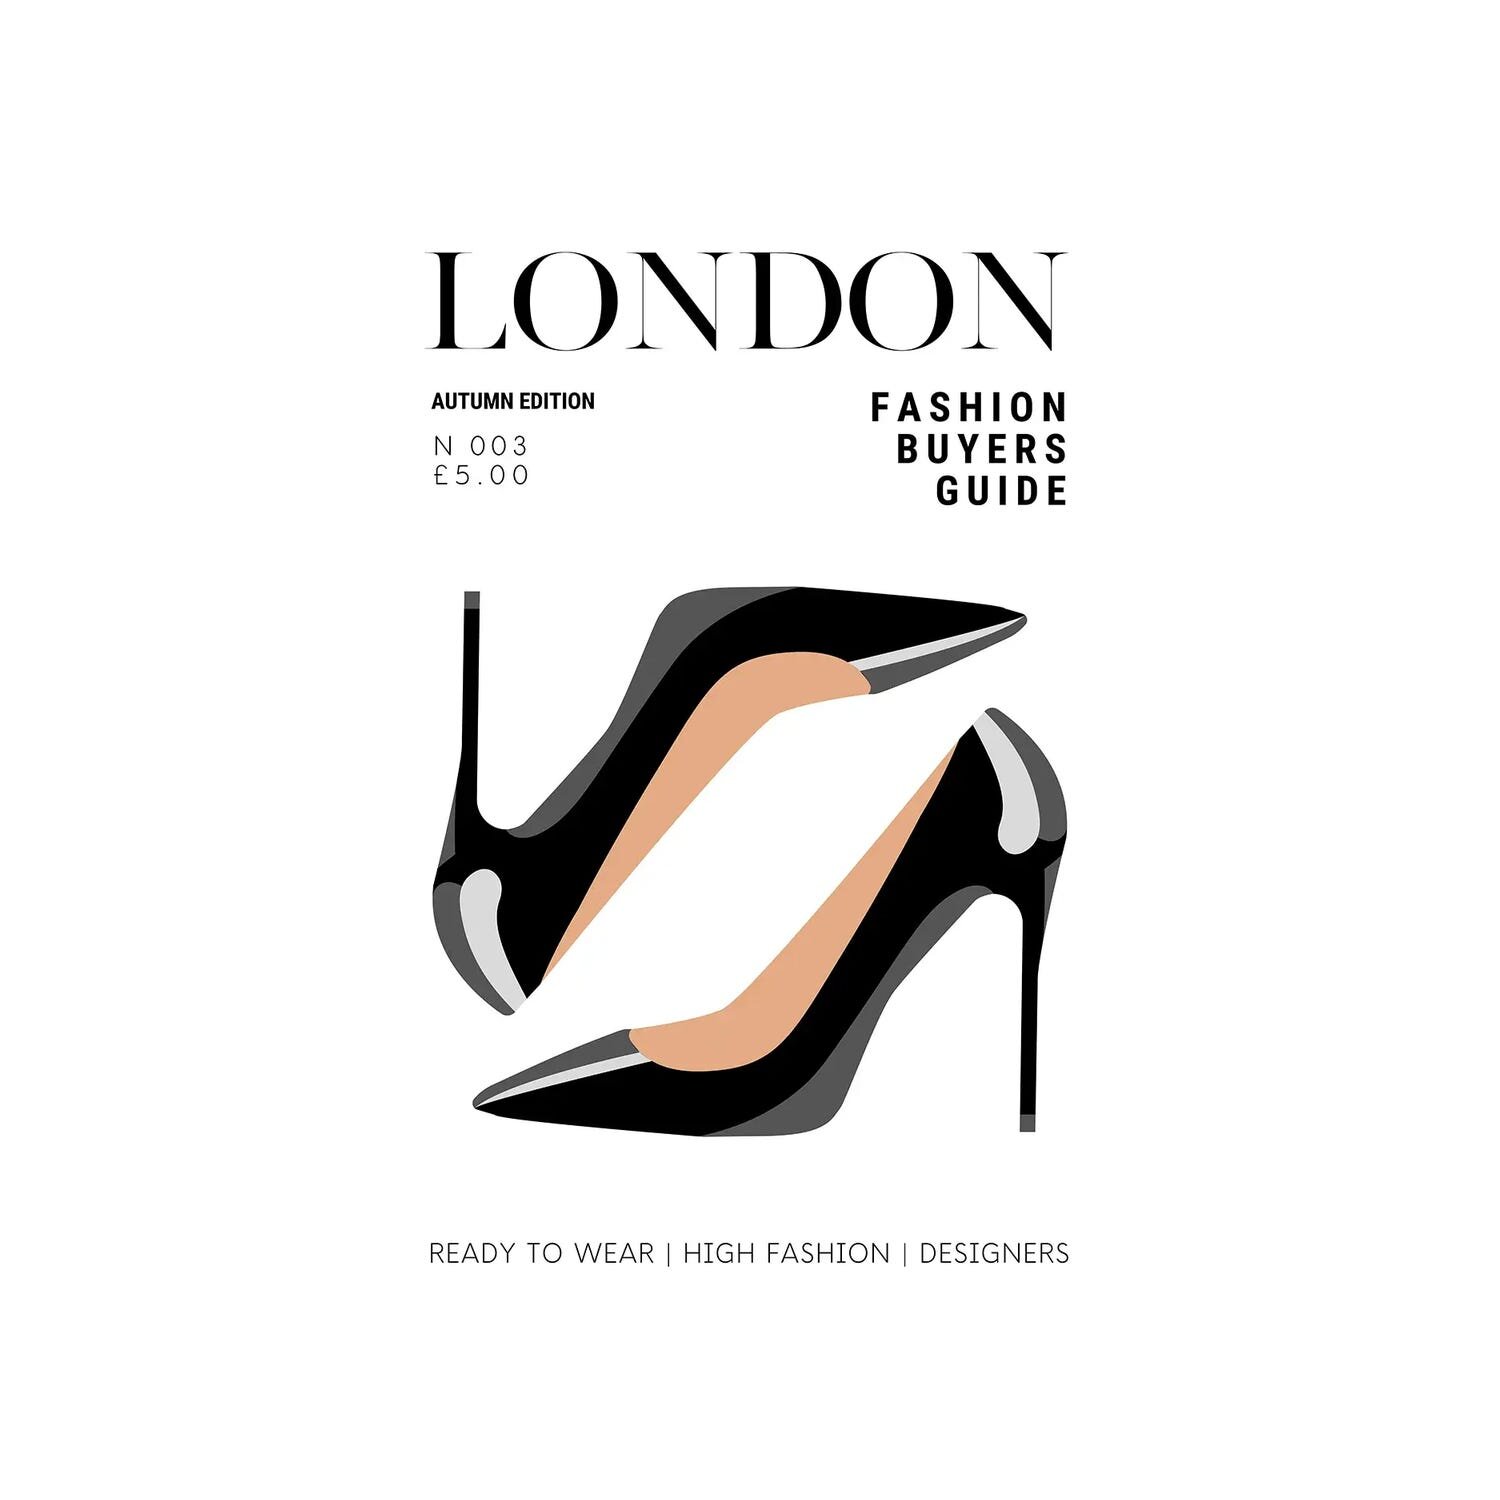 New Style Magazine, London